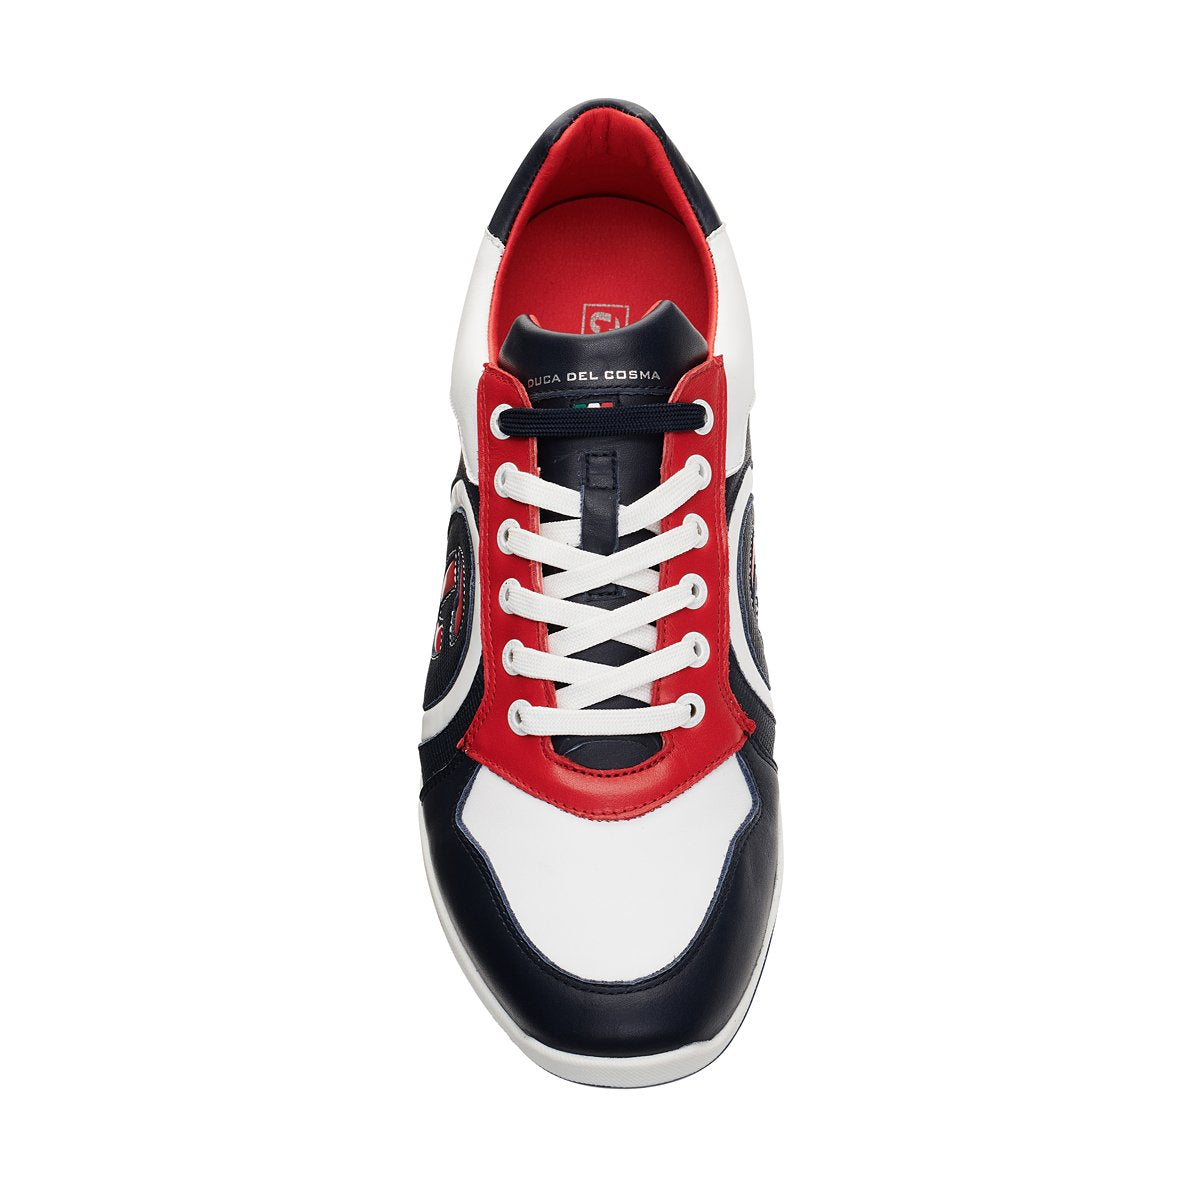 Men's Kuba 2.0 Navy / White / Red Golf Shoe